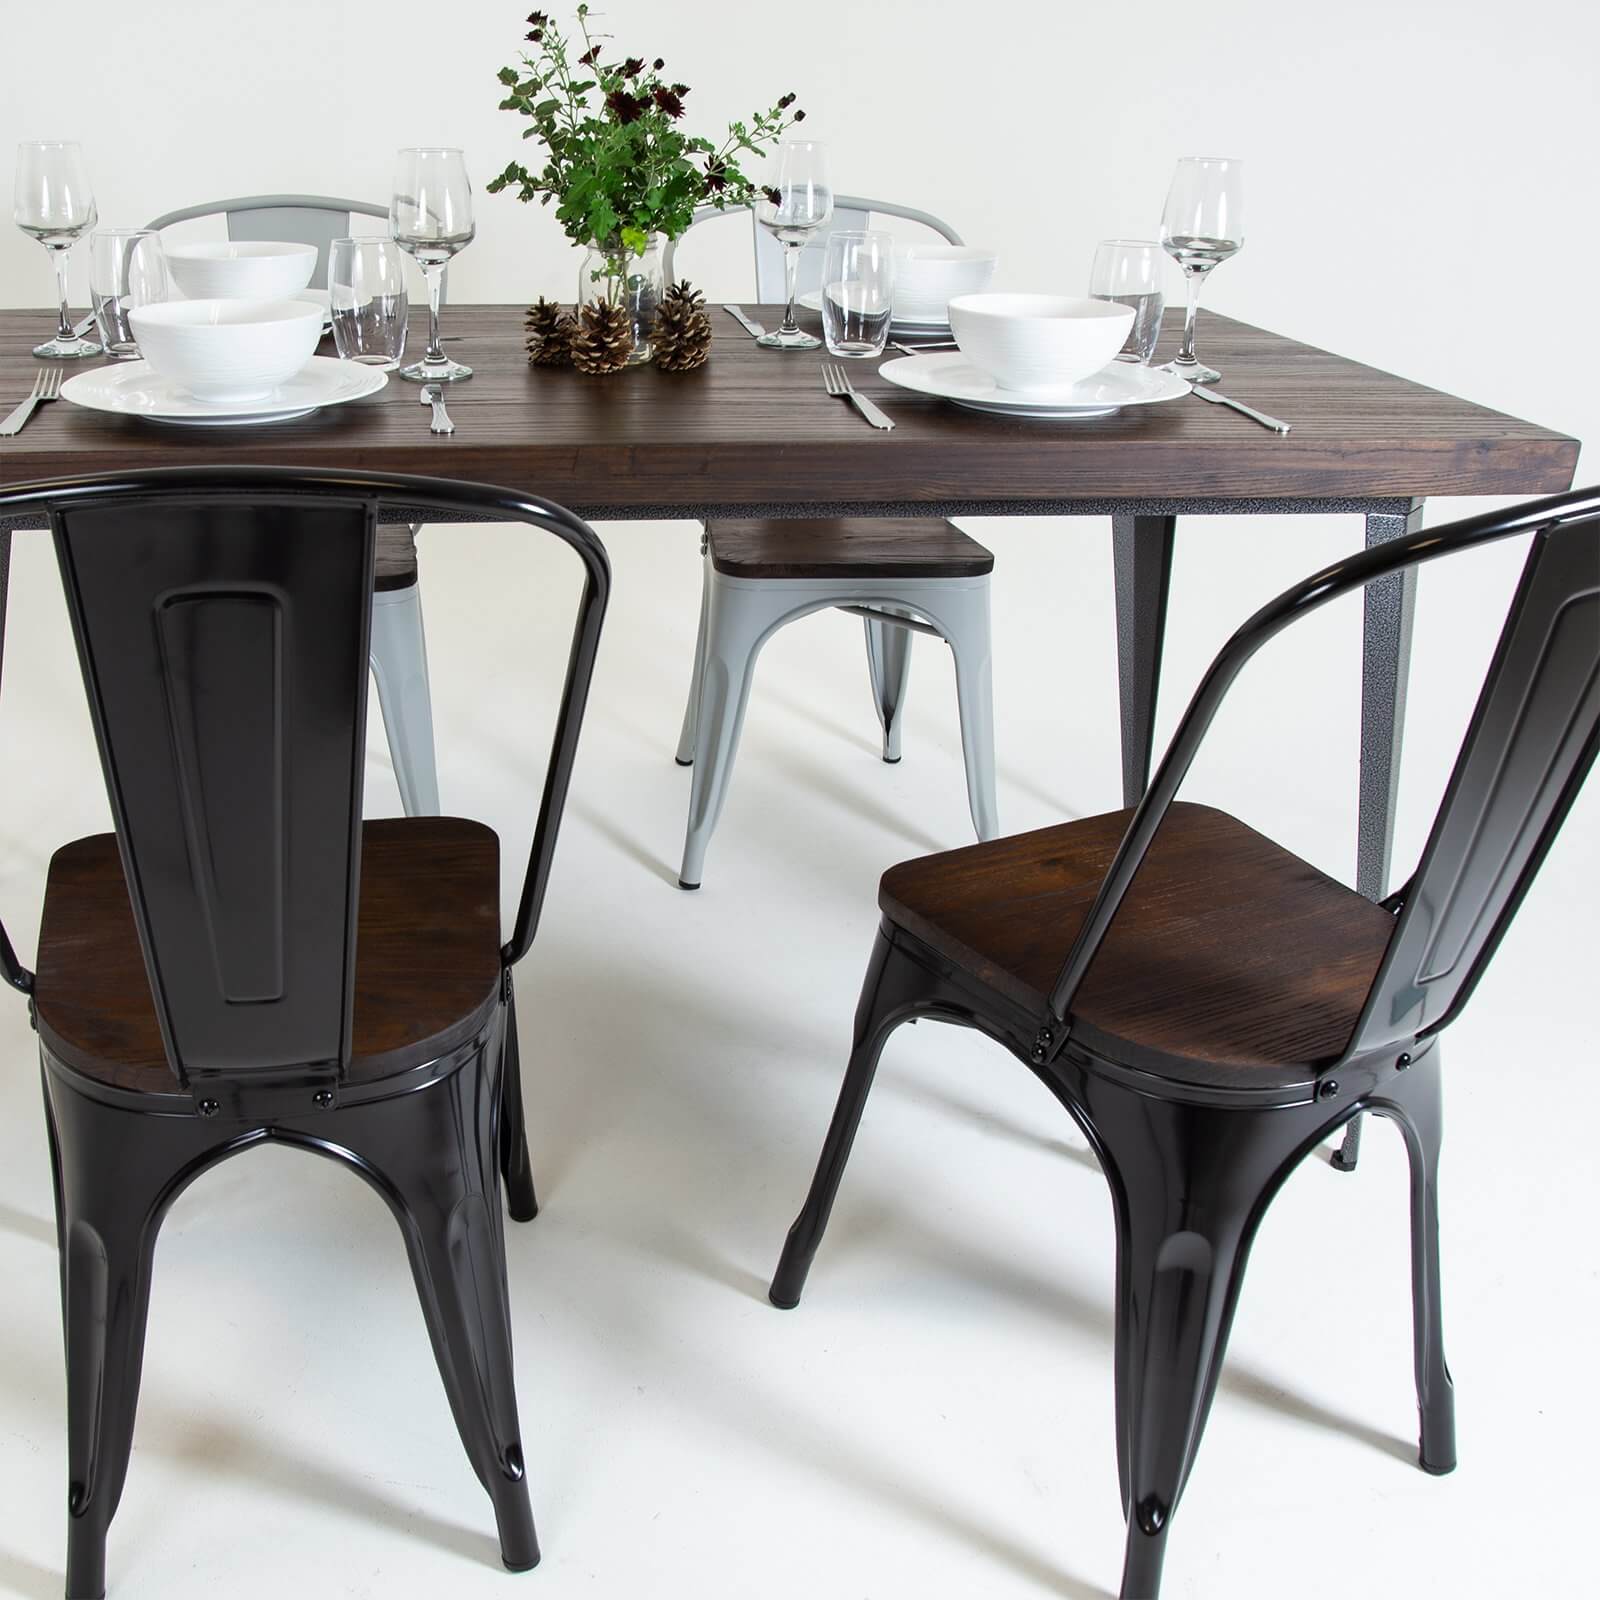 Pair of Metal & Wood Dining Chairs - Black